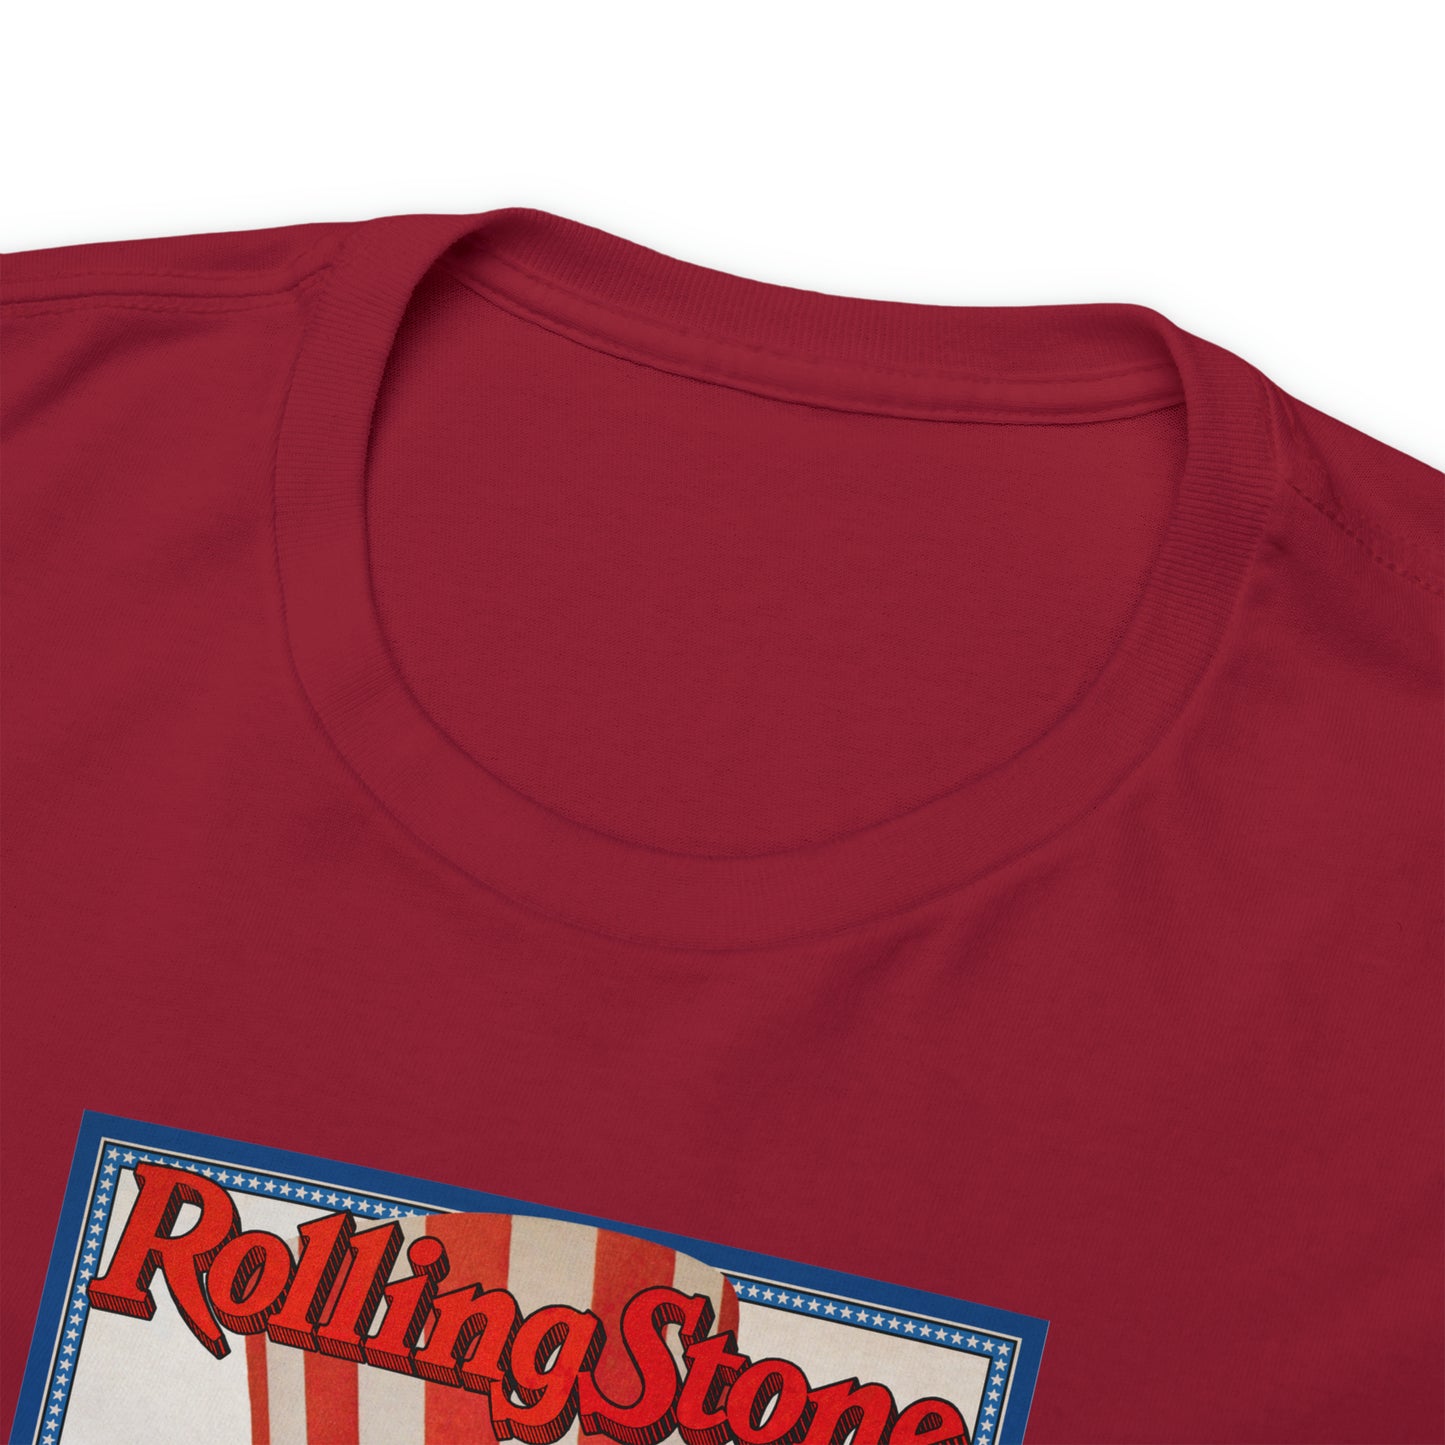 Willie Nelson T-Shirt